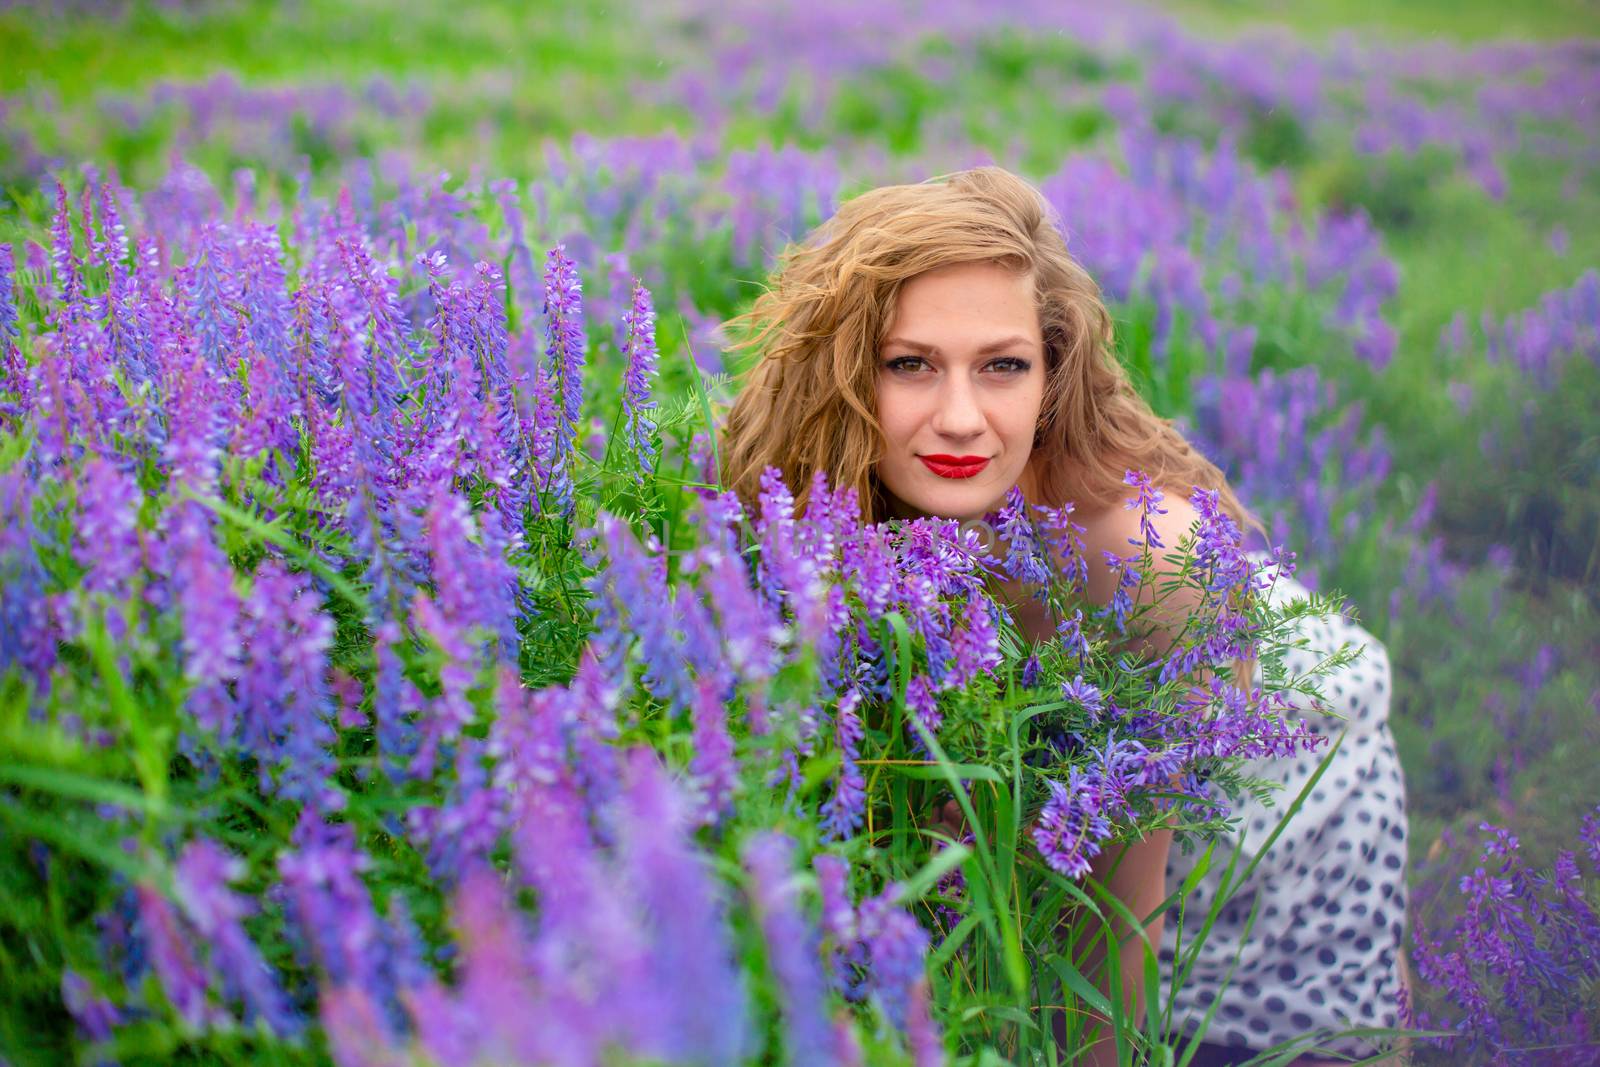 Beautiful young blonde girl in a green field among purple wildflowers. Wildlife beautiful girl.